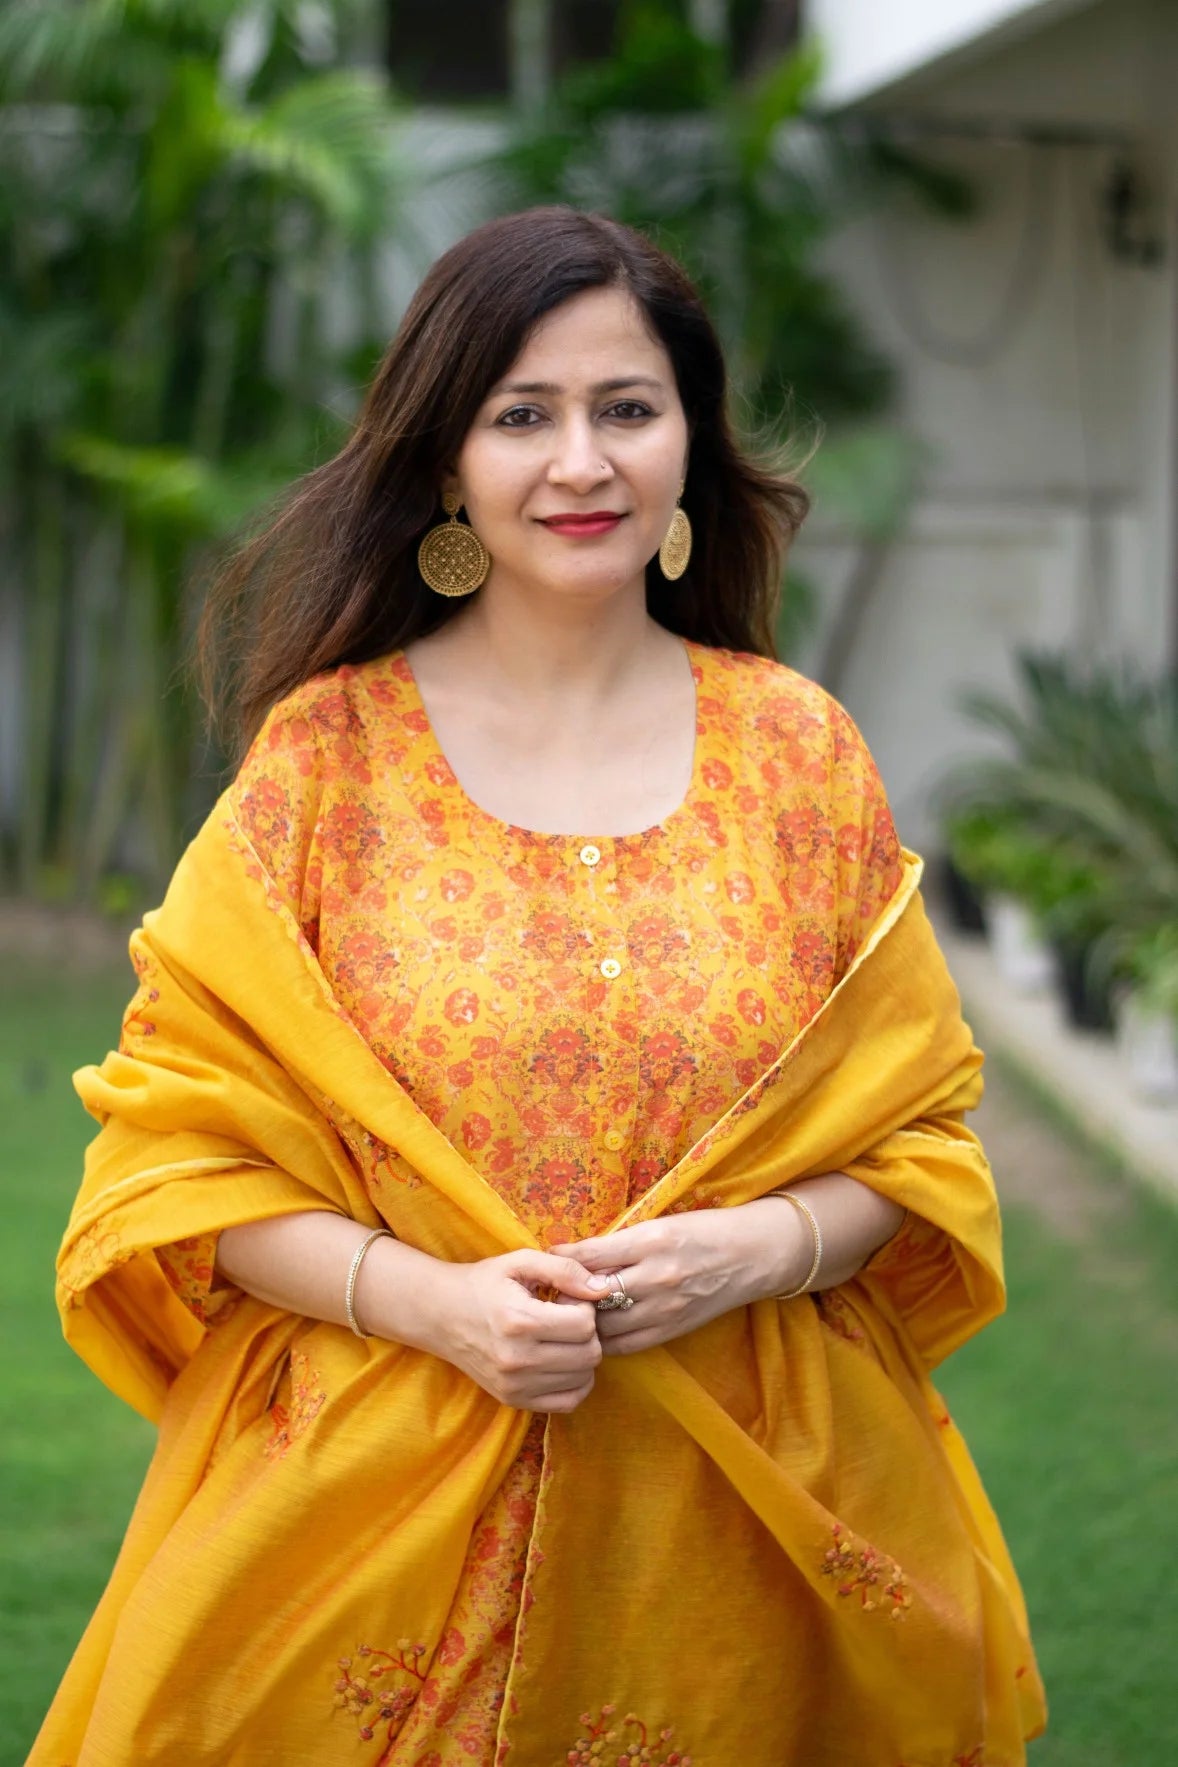 A beautiful woman in a yellow Chanderi Kurta smiles at the camera.